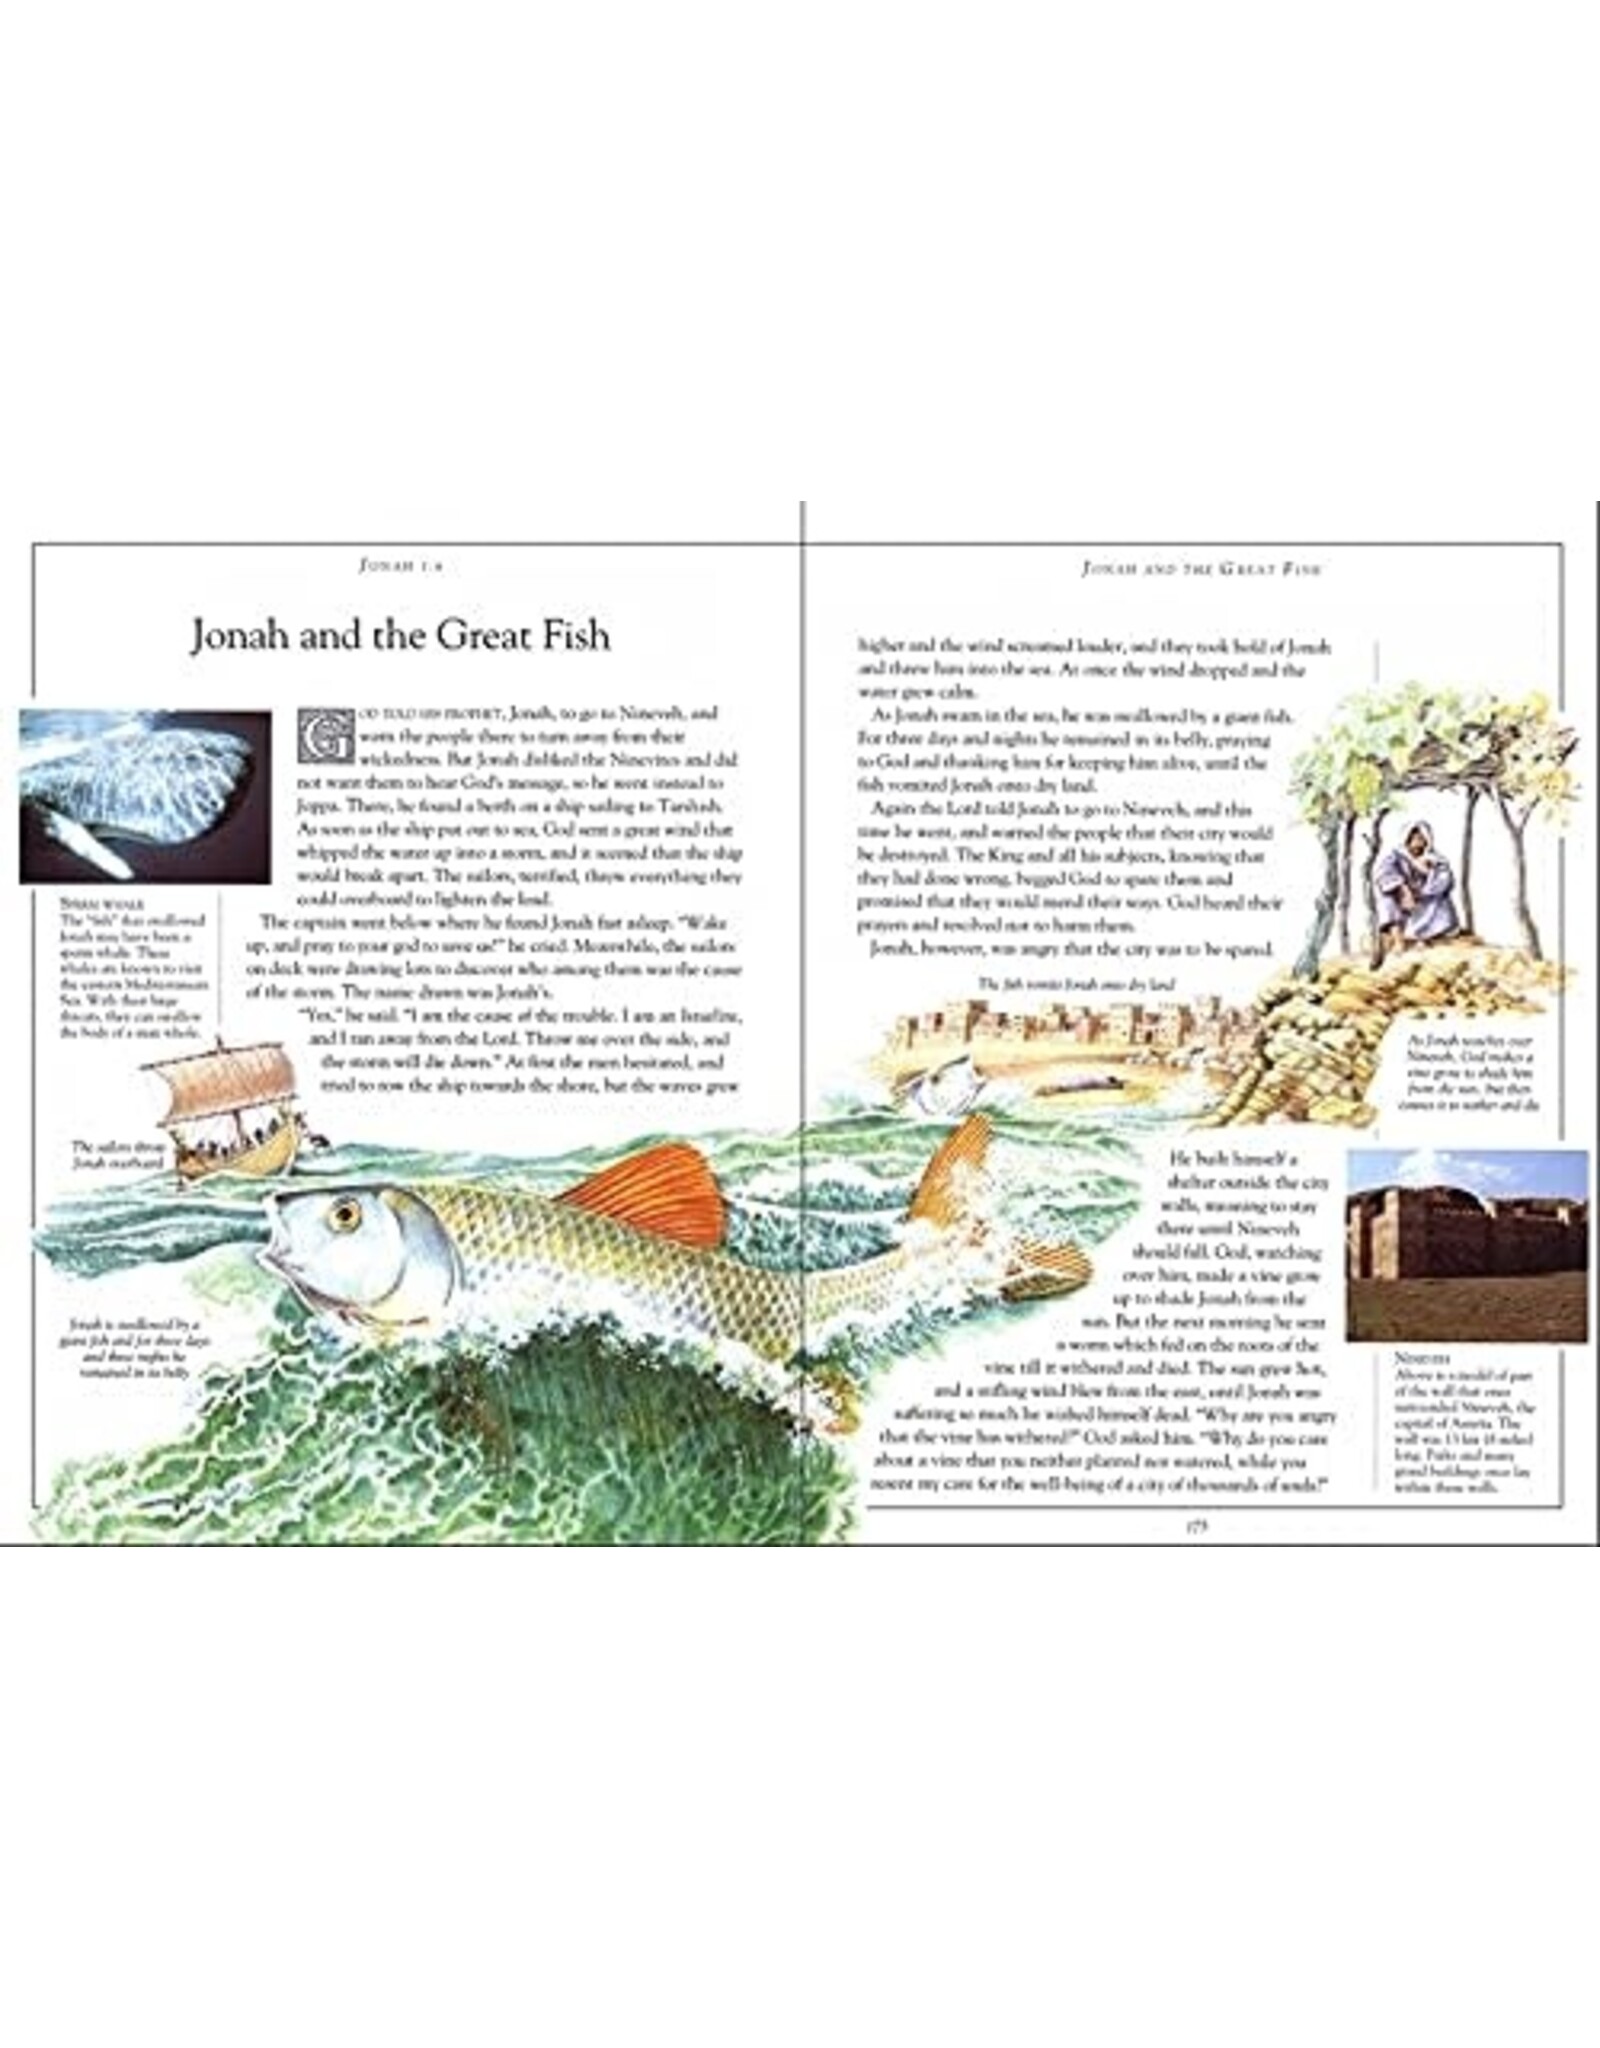 DK Publishing Children's Illustrated Bible